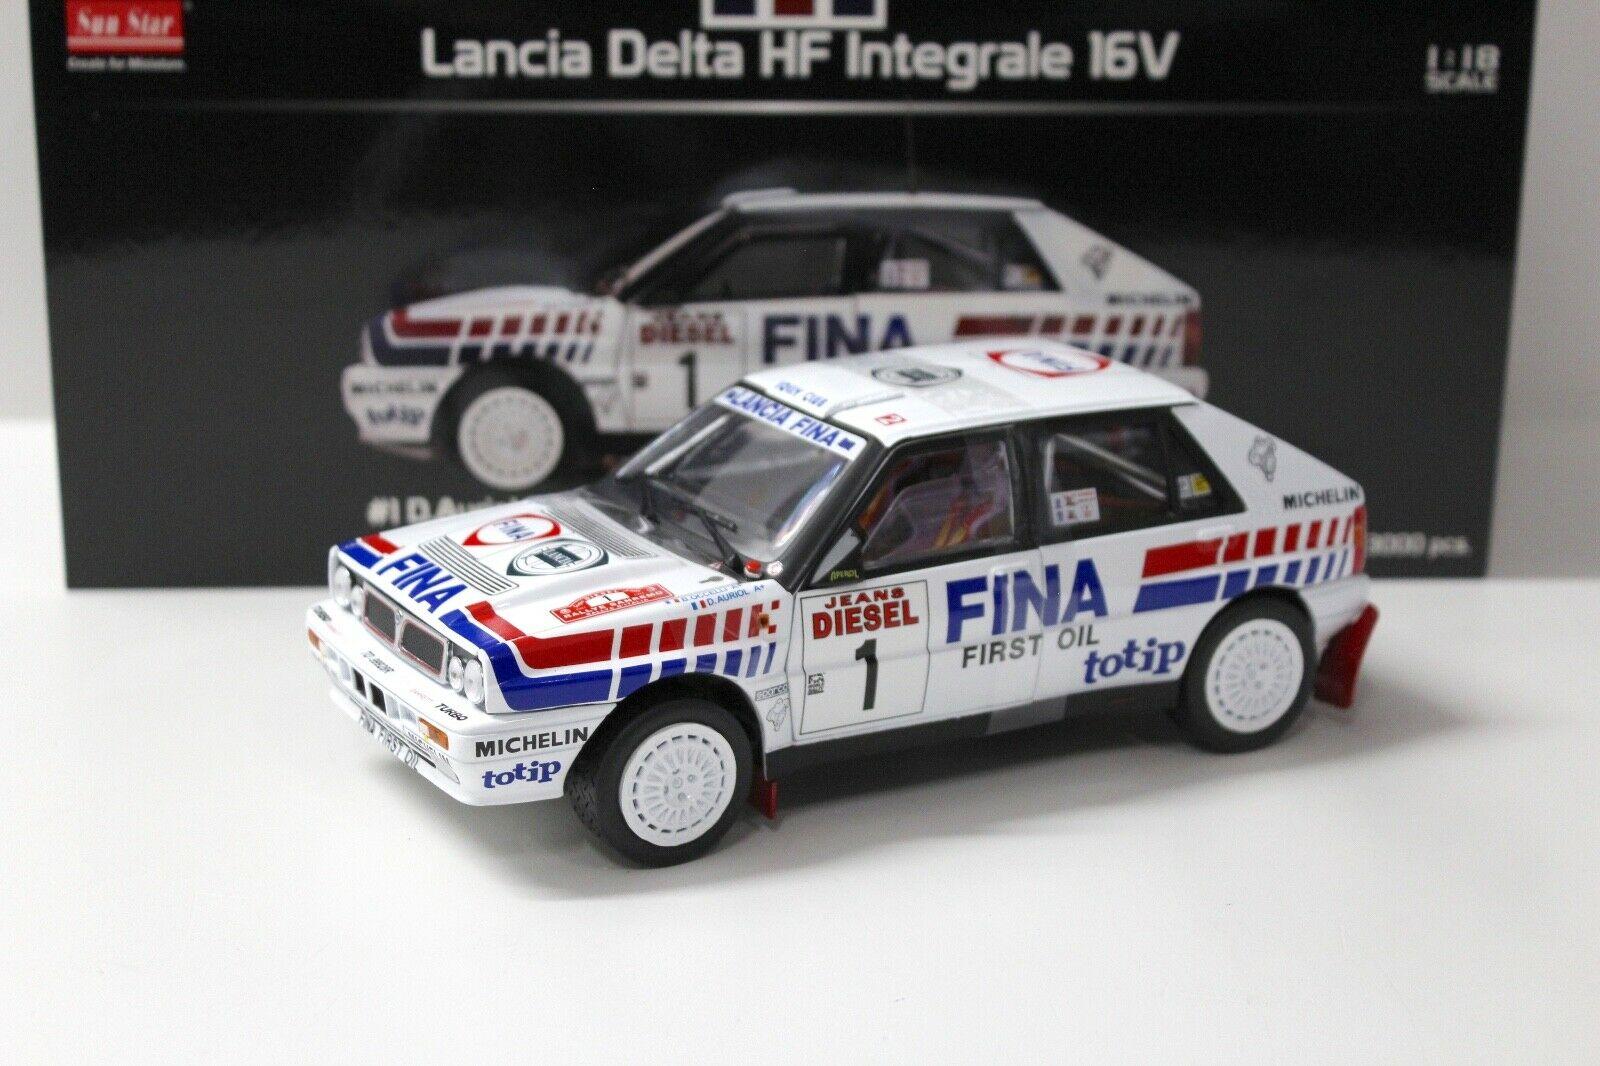 1:18 SunStar Lancia Delta HF Integrale 16V Rallye Sanremo #1 white